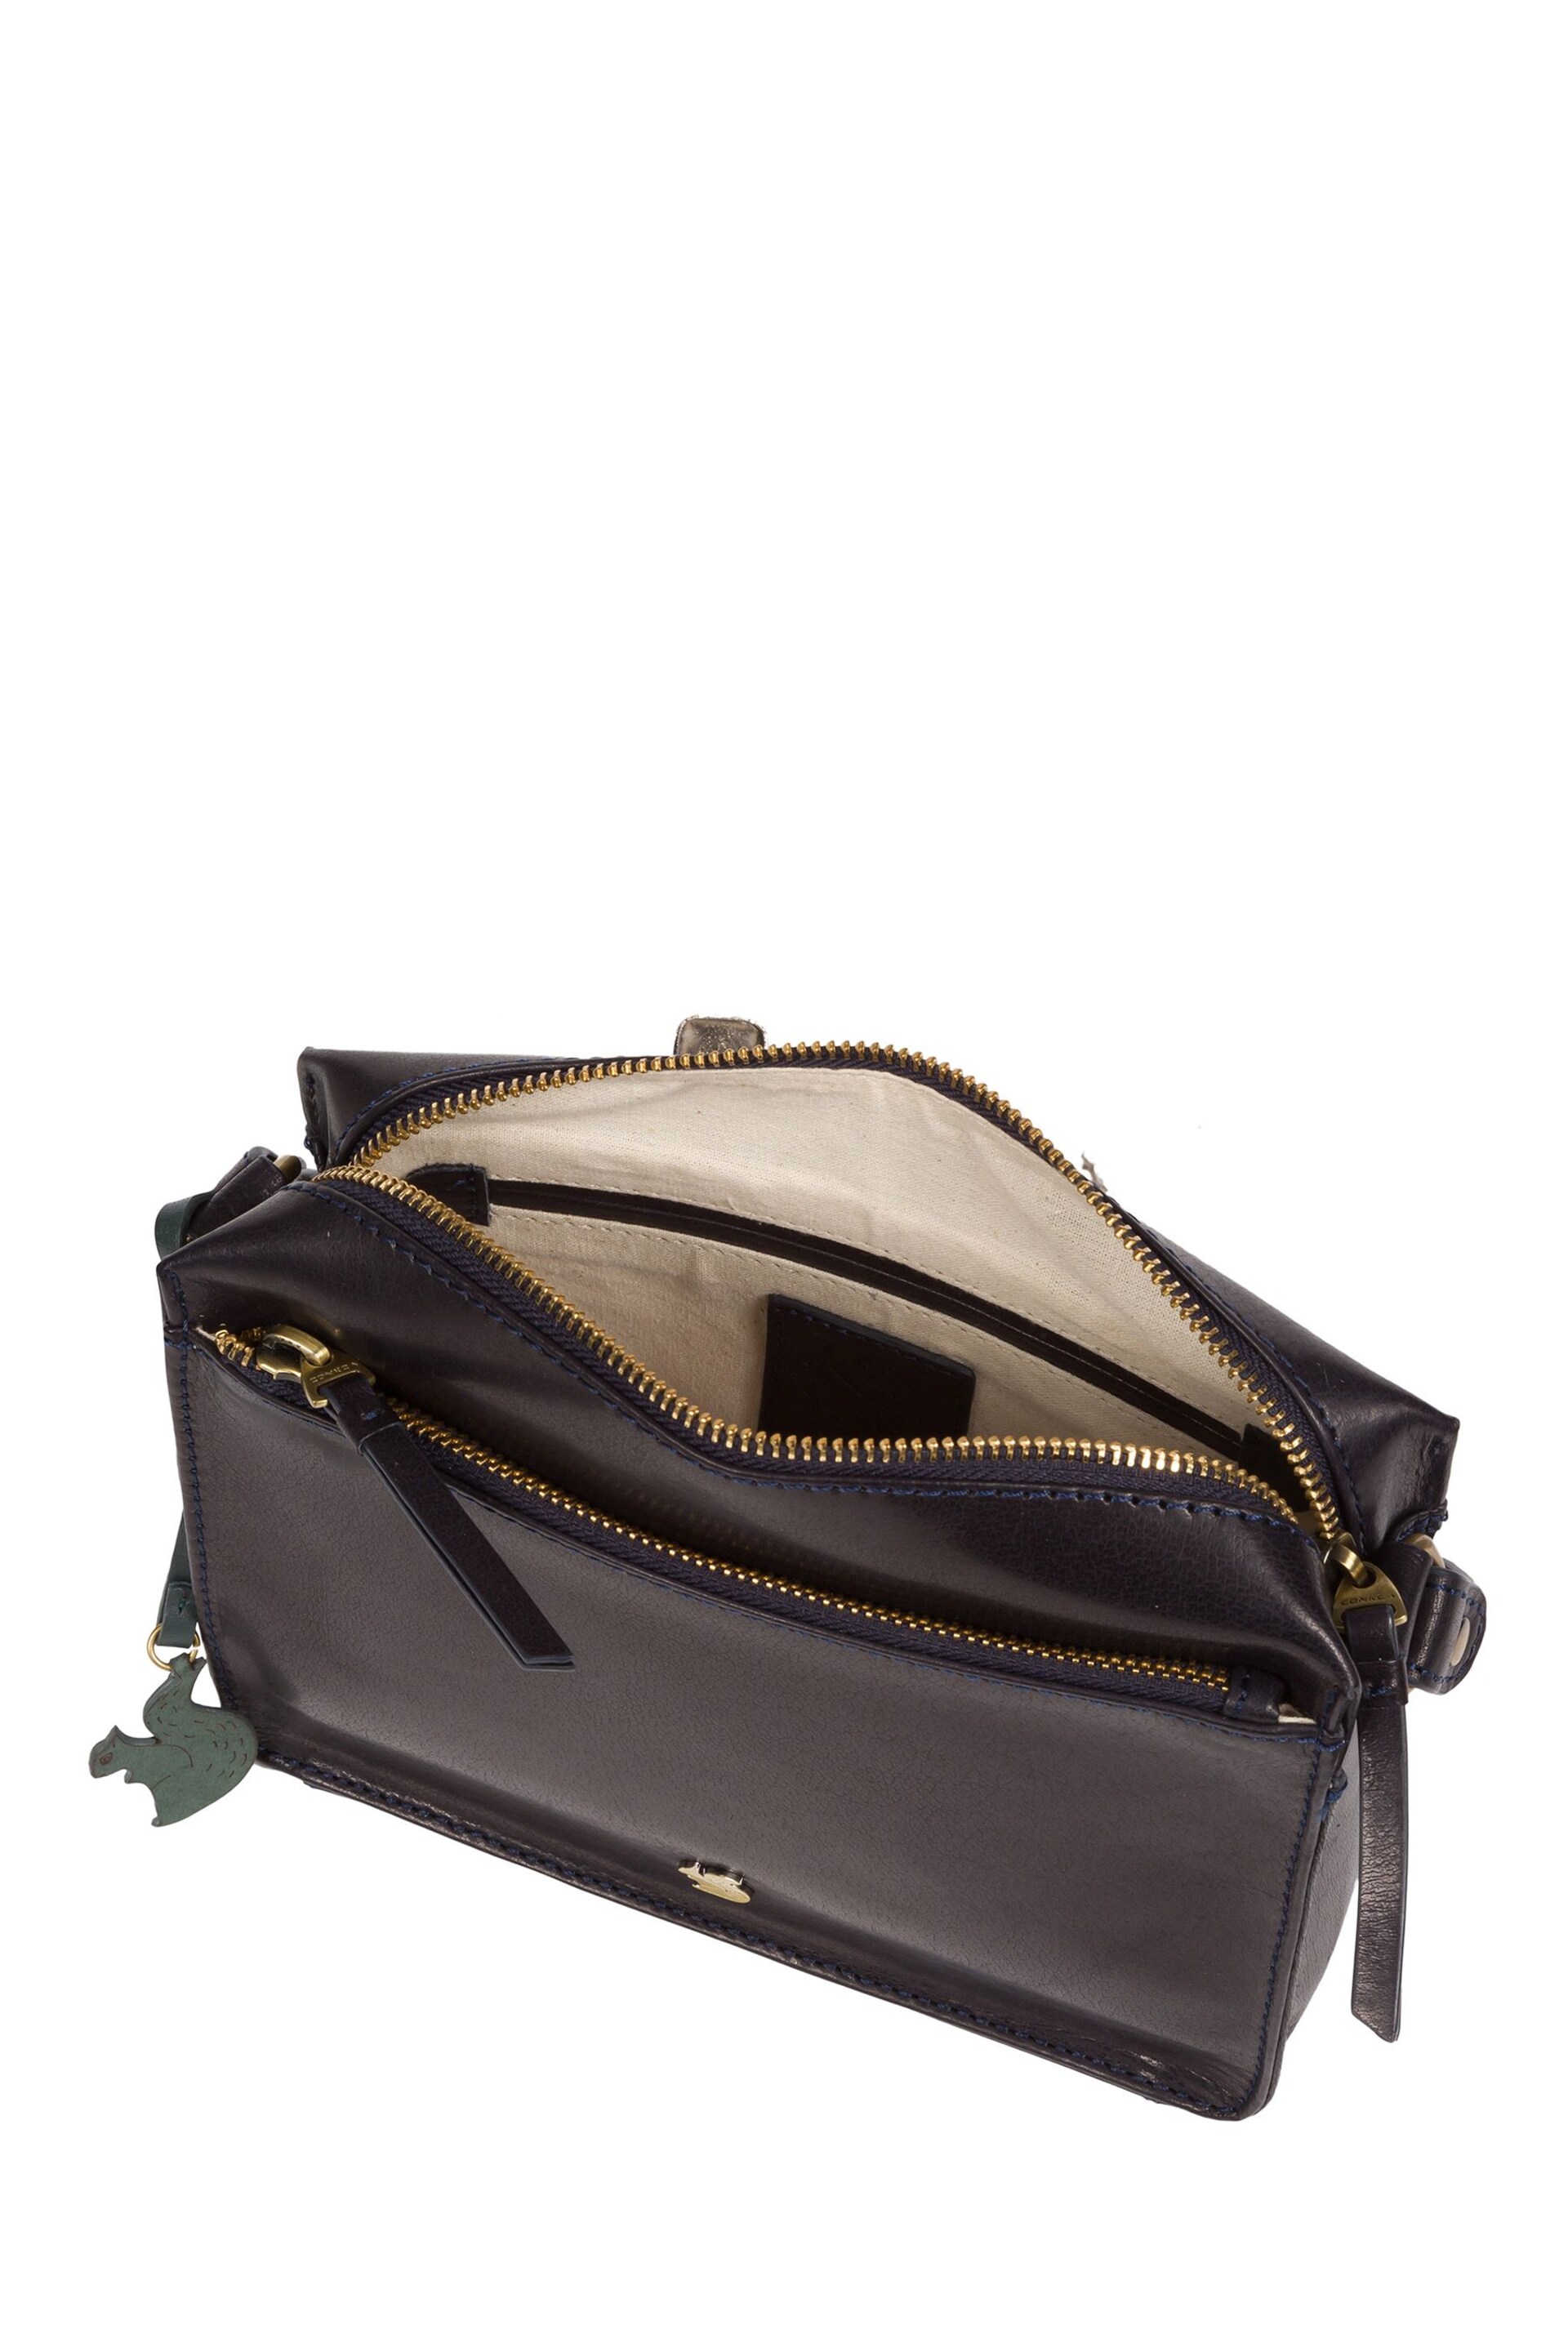 Conkca Aurora Leather Cross Body Bag - Image 3 of 6